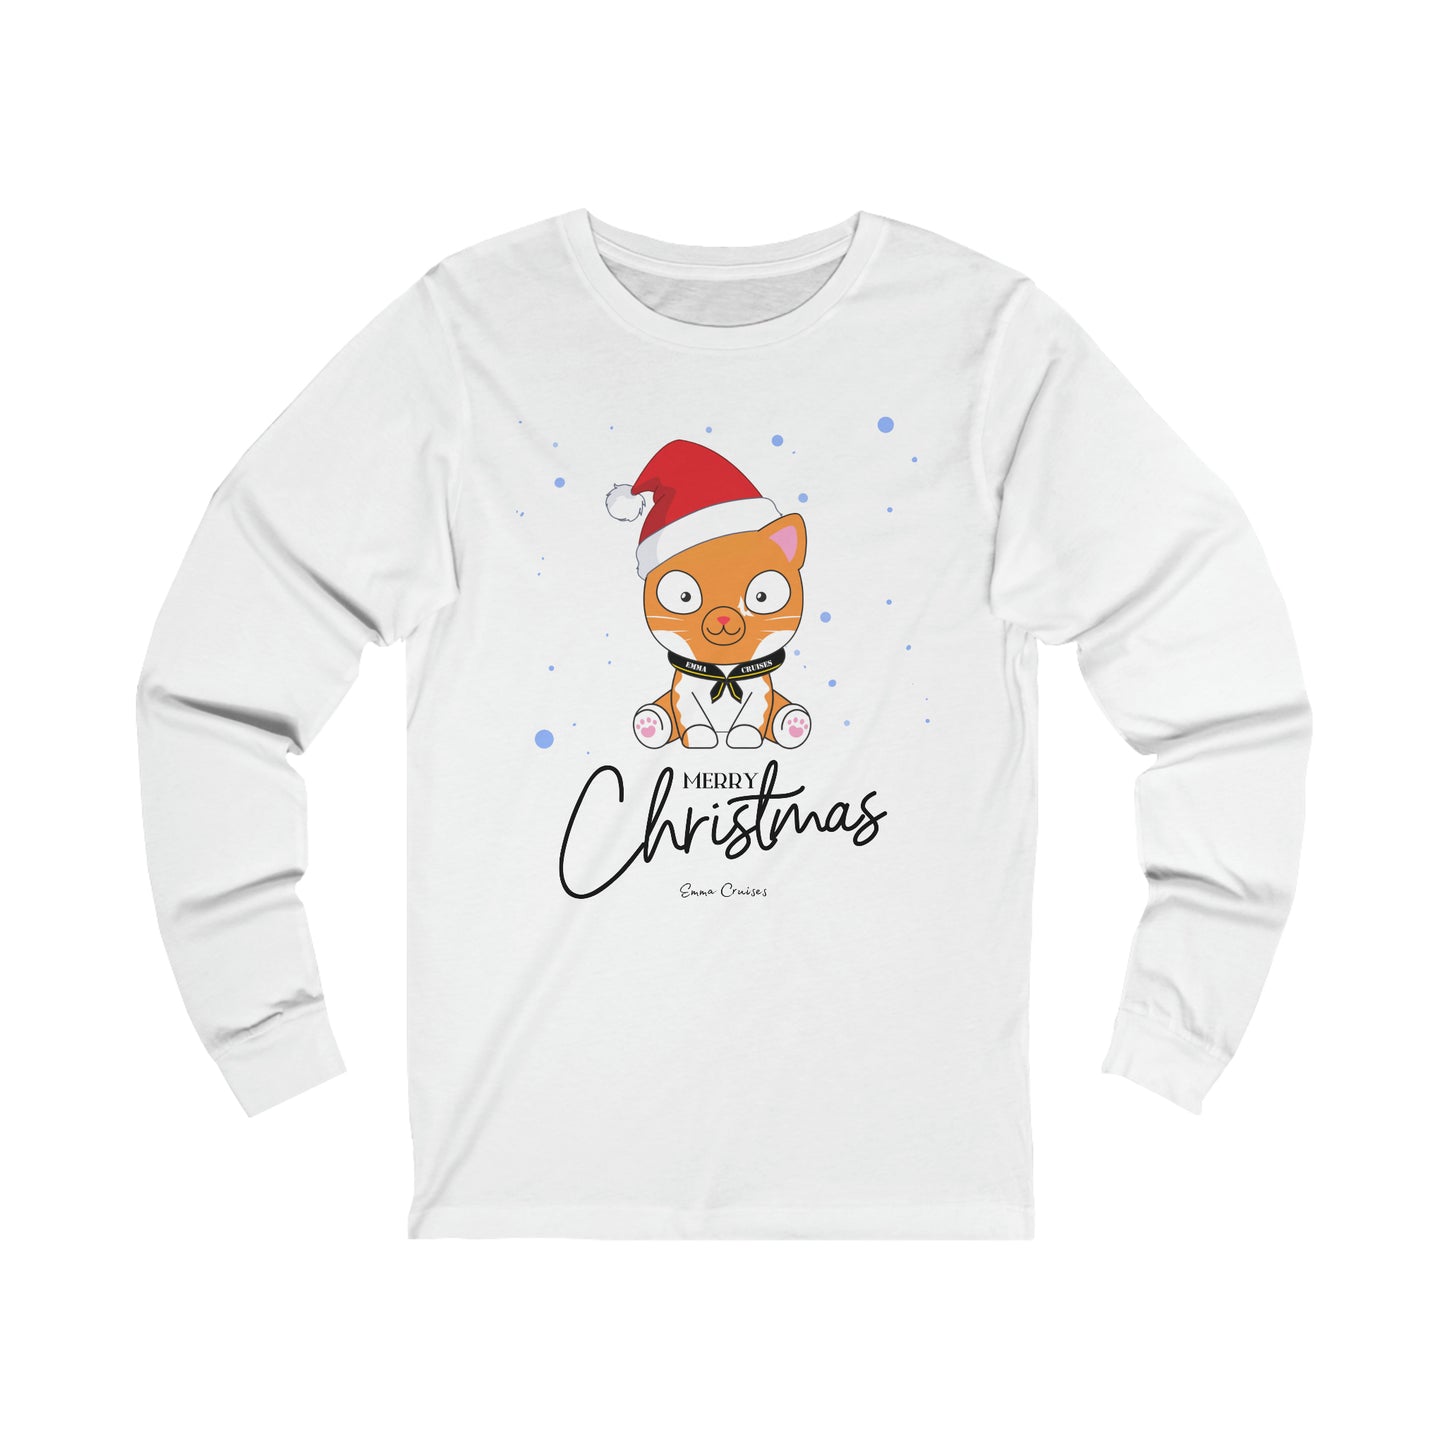 Merry Christmas - UNISEX T-Shirt